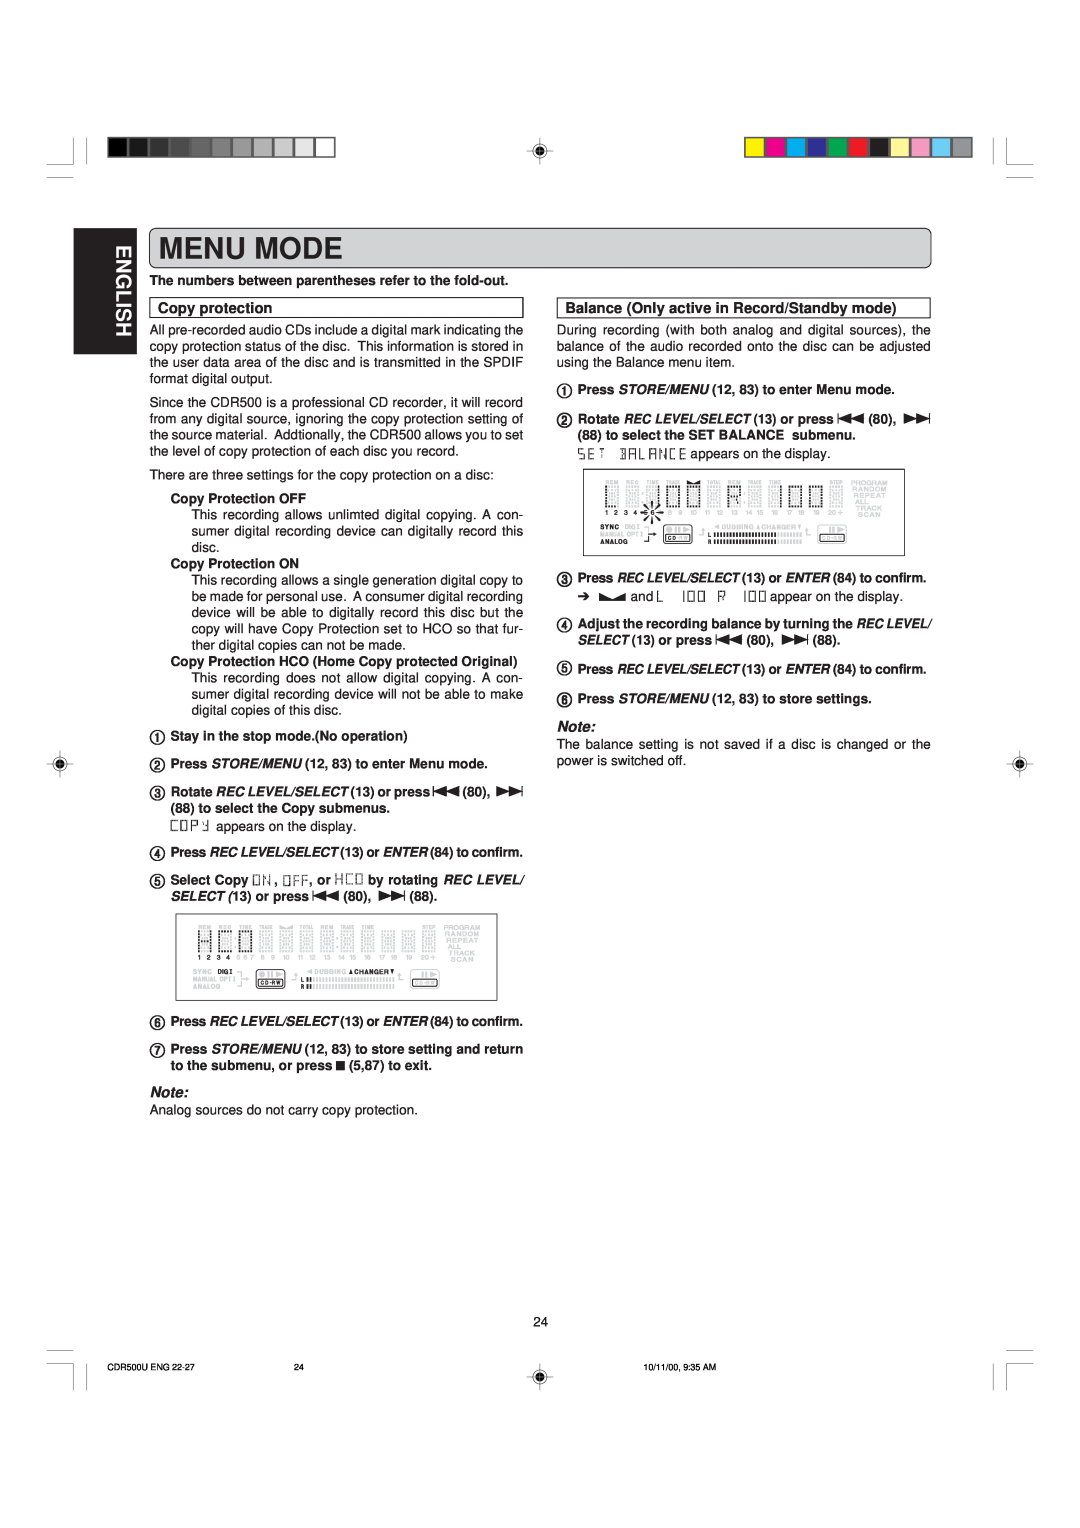 Marantz CDR500 manual Menu Mode, English, Copy protection, Balance Only active in Record/Standby mode 